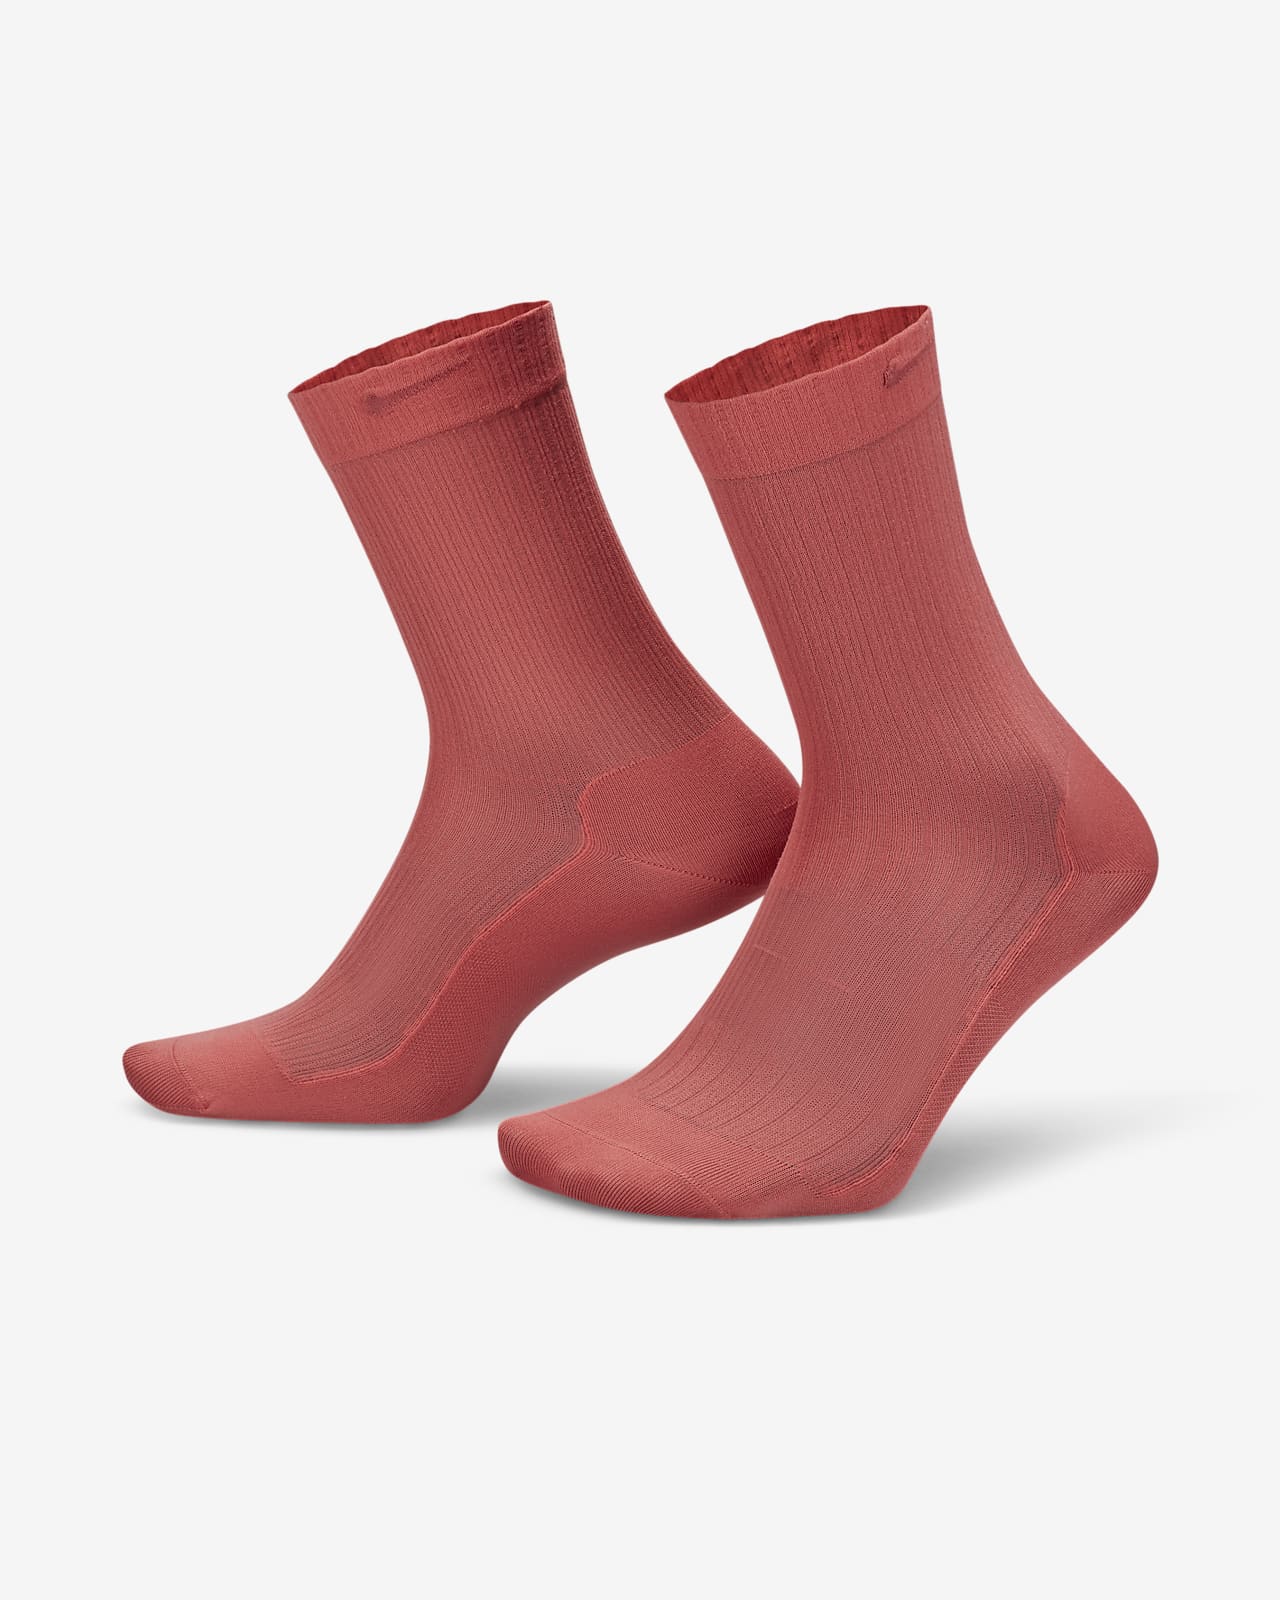 Nike Women's Sheer Crew Socks (1 Pair)